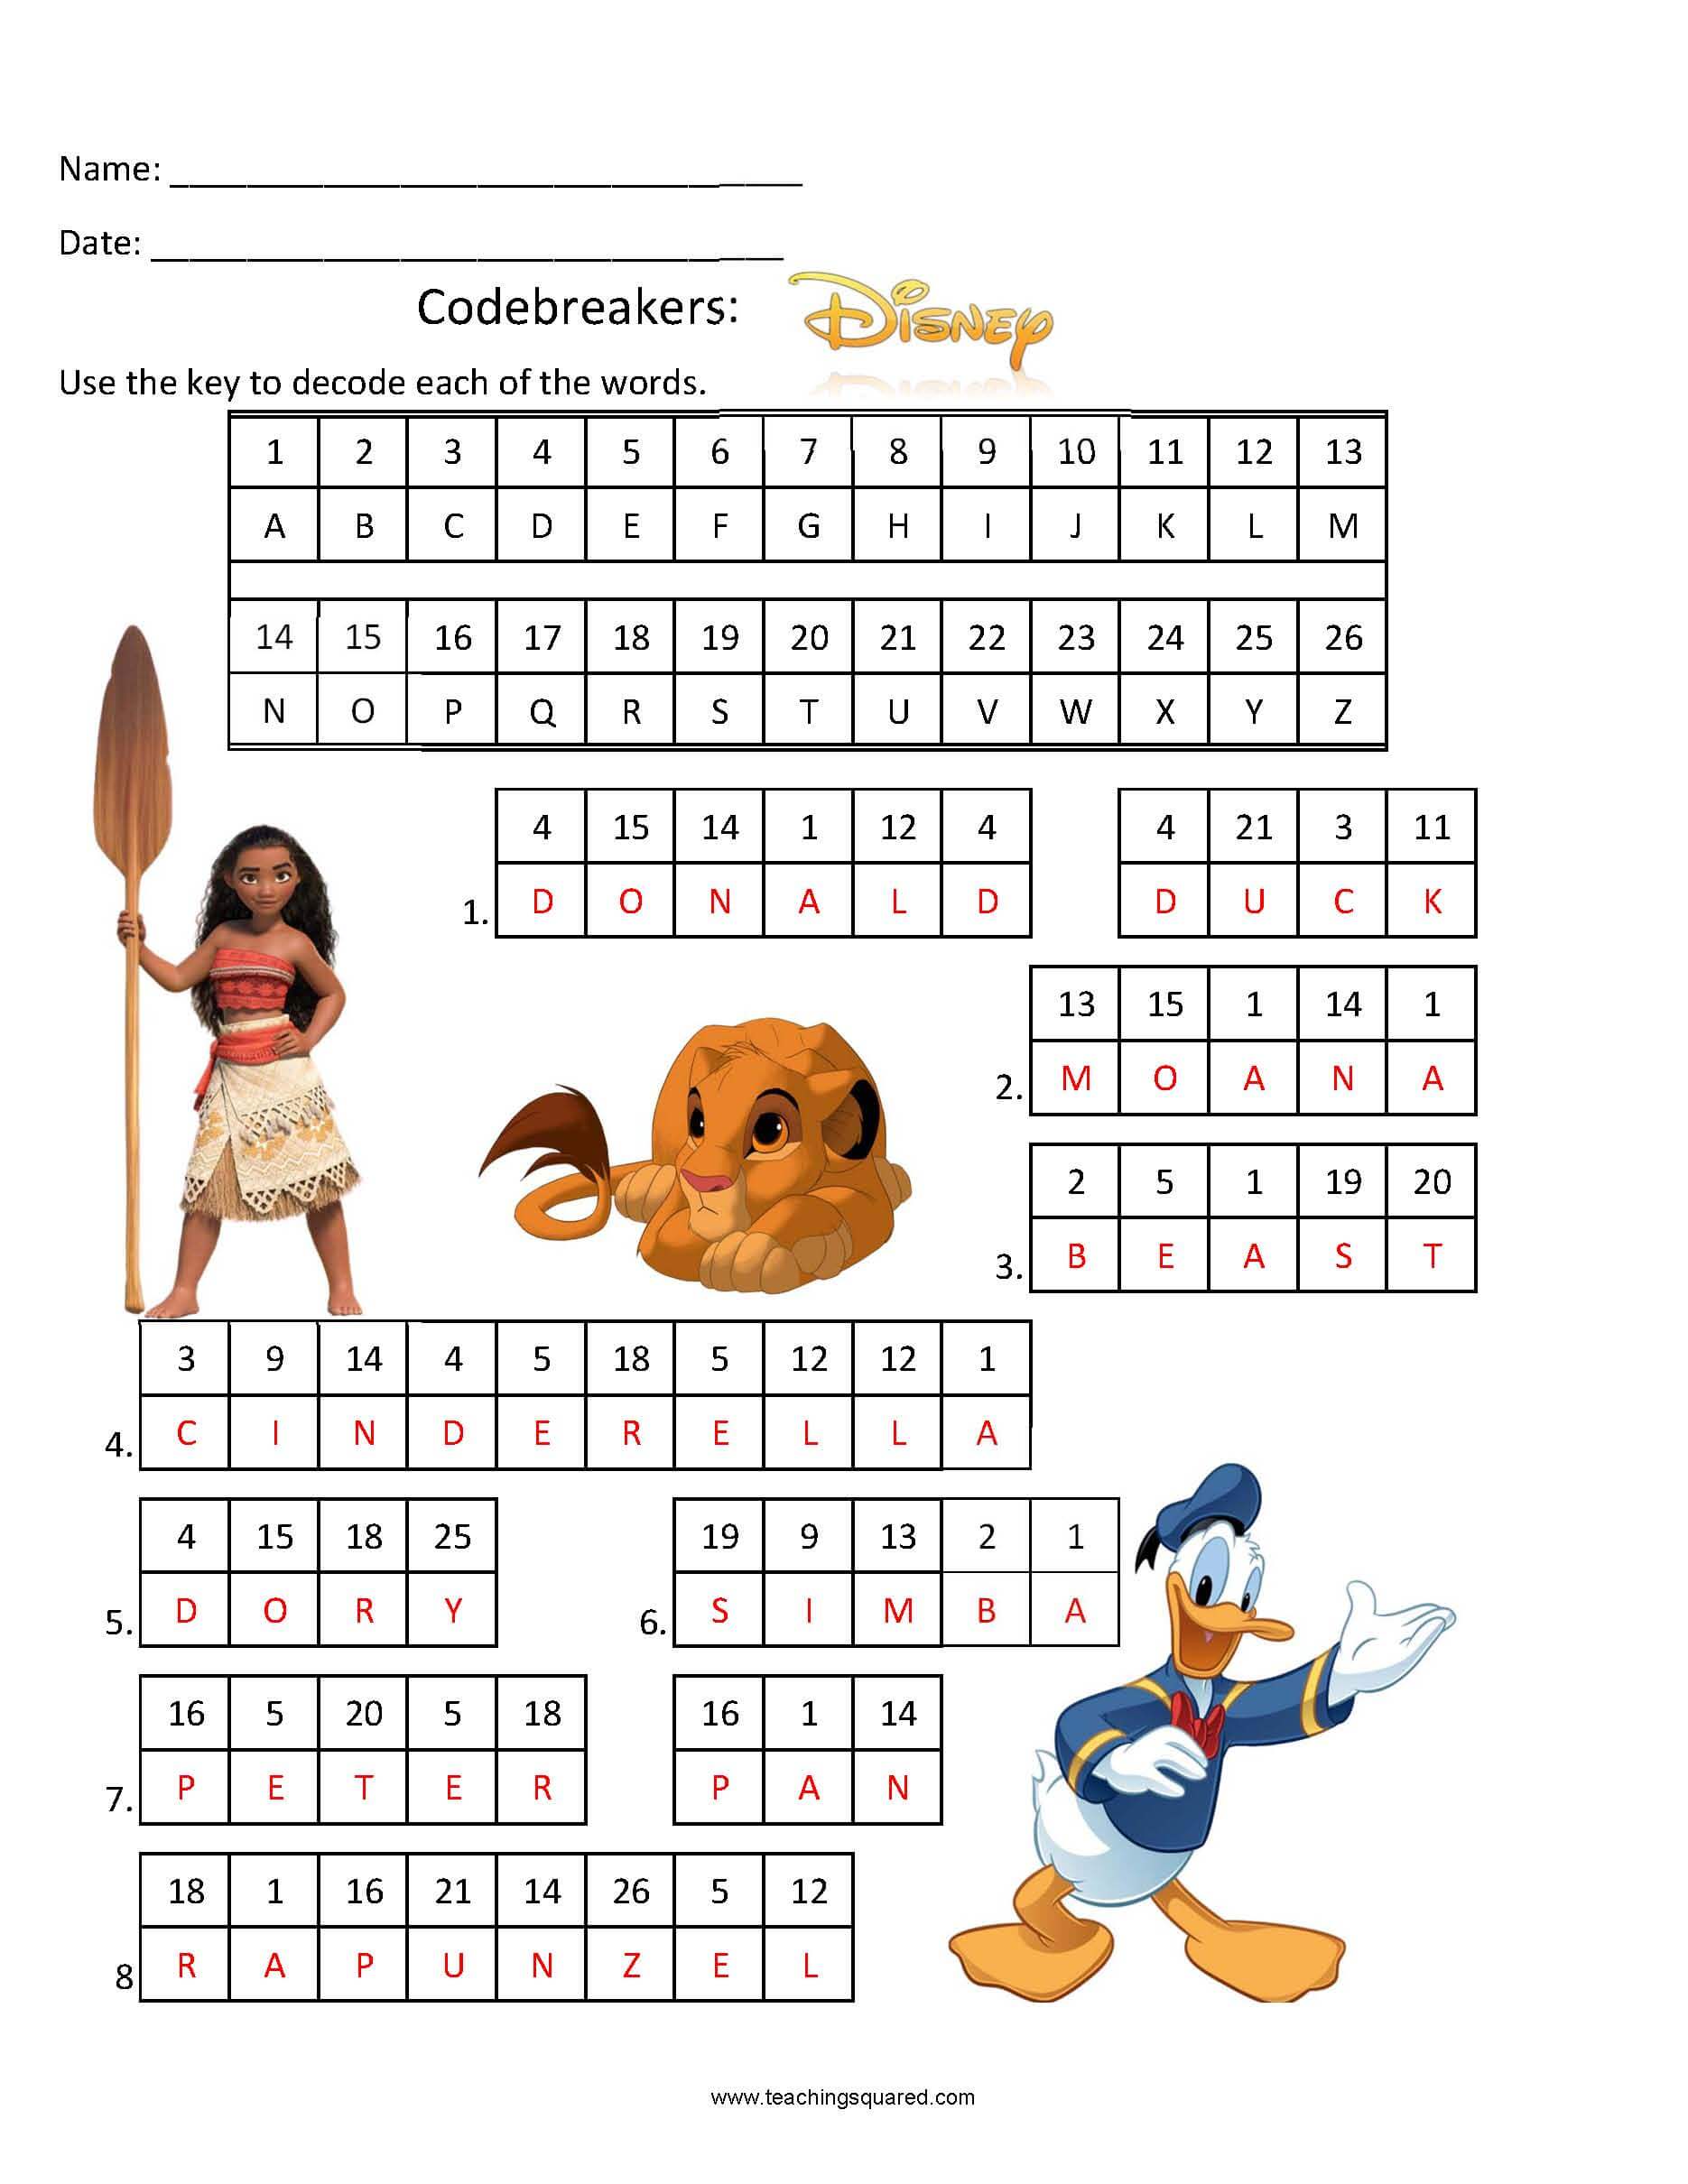 Codebreakers- Disney Fun Puzzle for kids